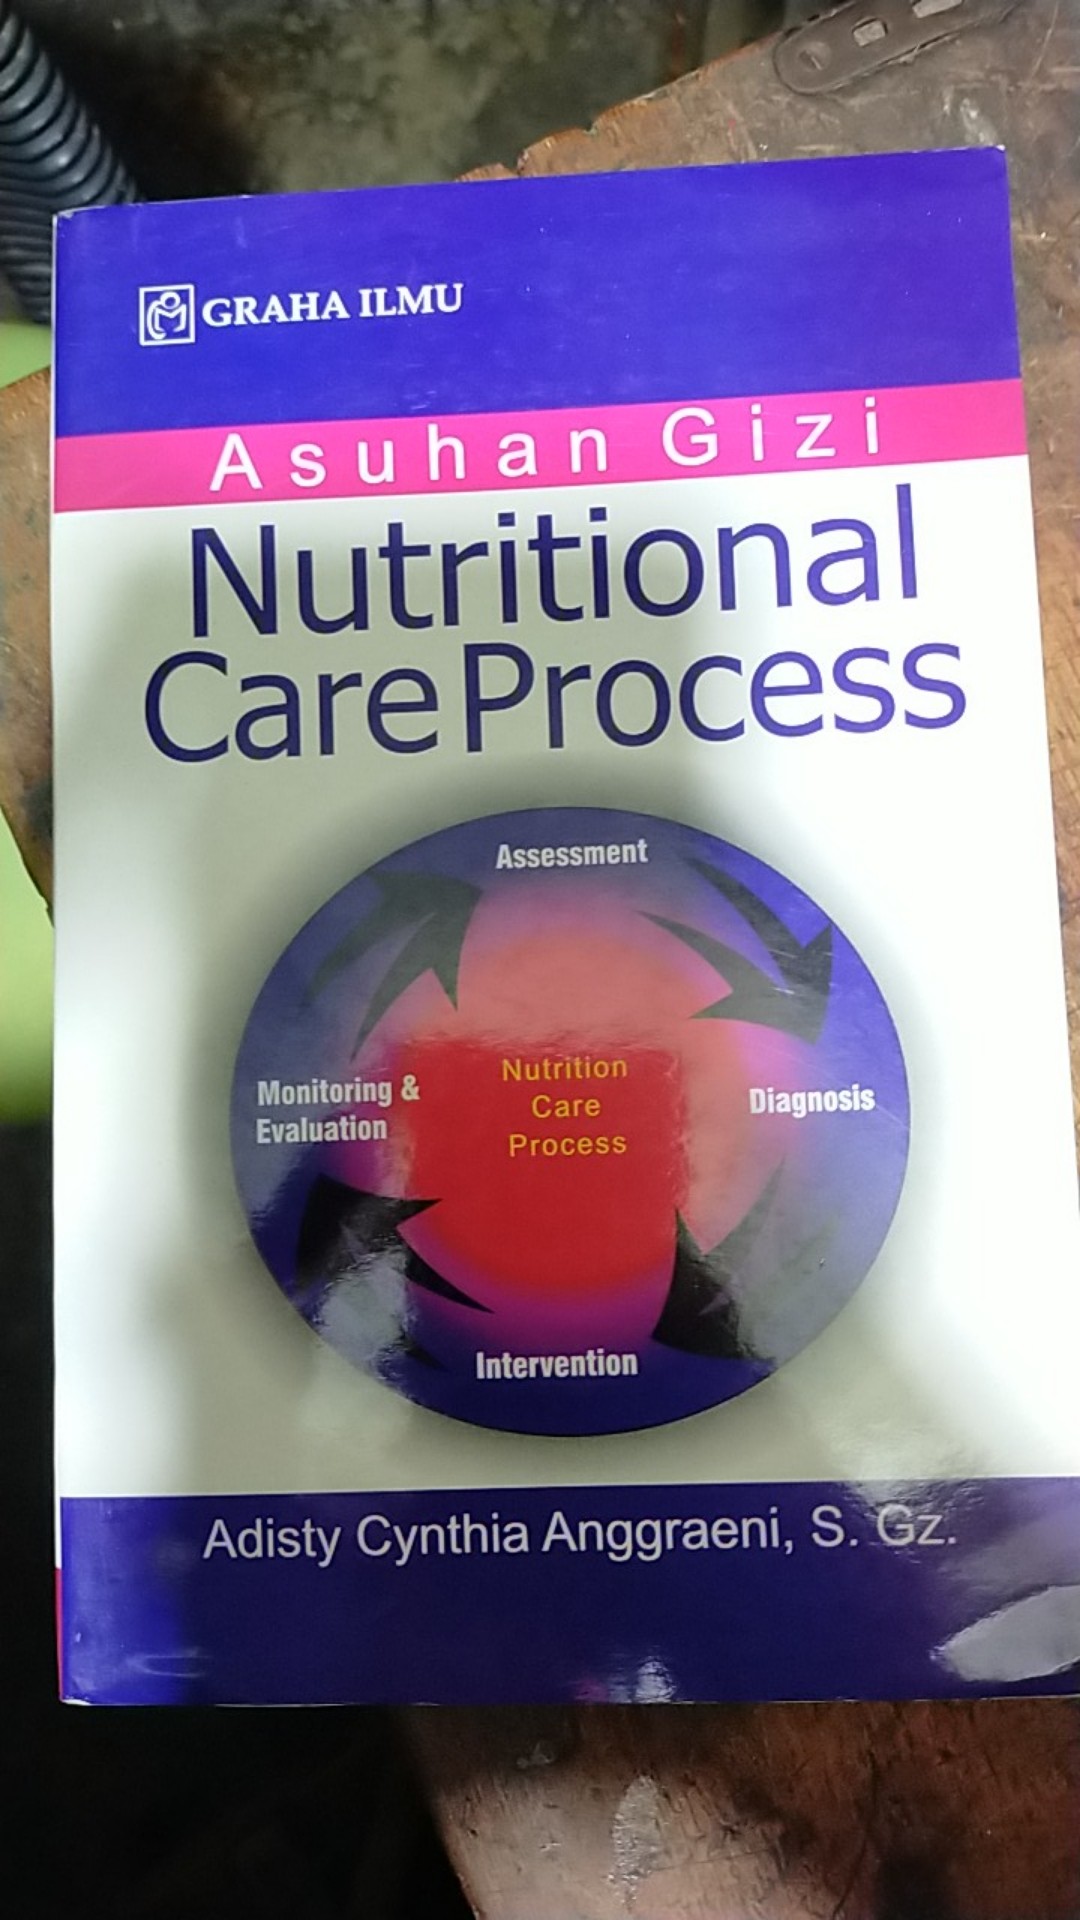 Asuhan gizi Nutritional care process